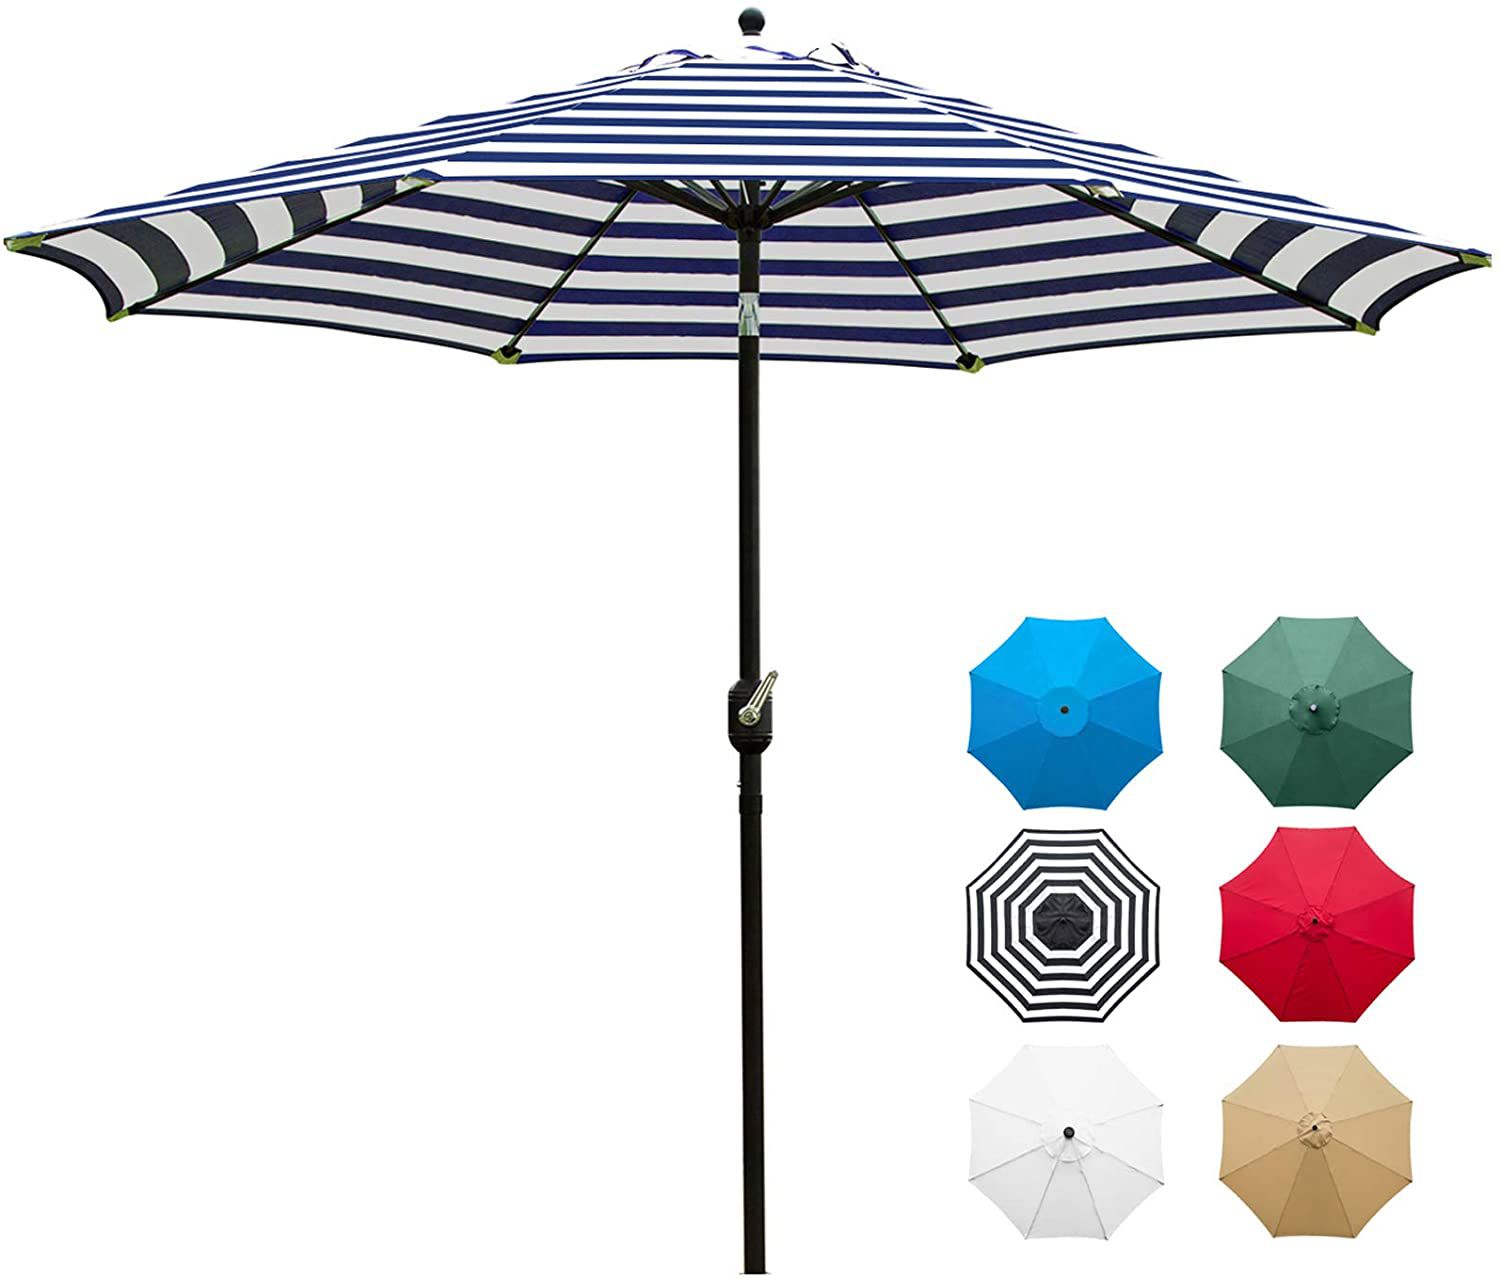 Sunnyglade 9' Patio Umbrella Outdoor Table Umbrella with 8 Sturdy Ribs